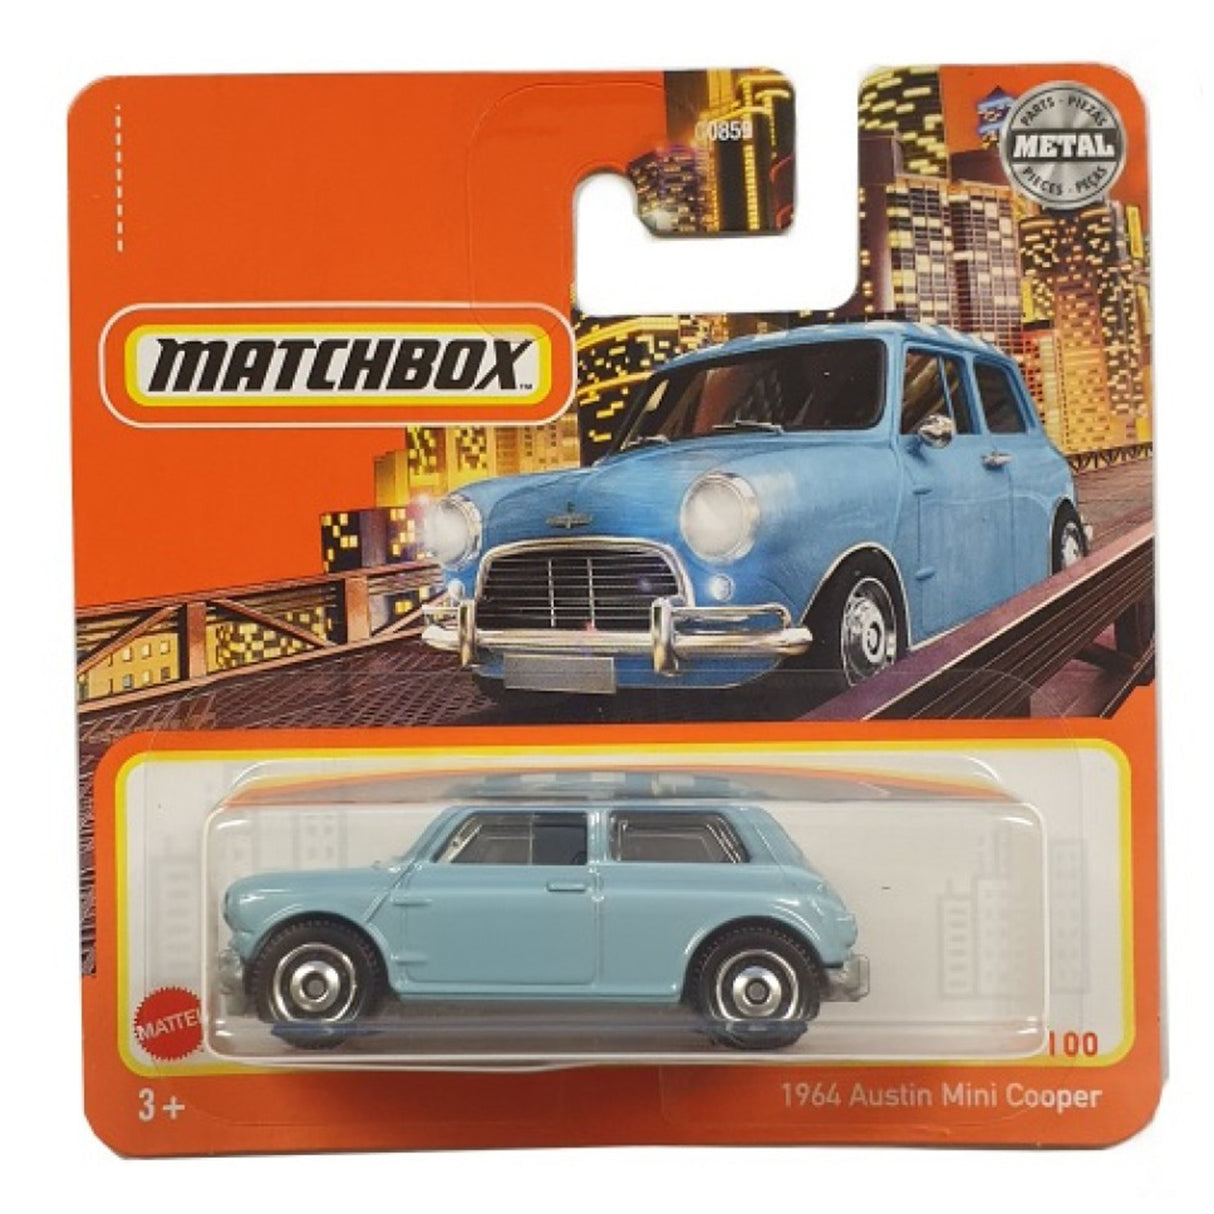 Matchbox 1964 Austin Mini Cooper Die-cast Model GXM88